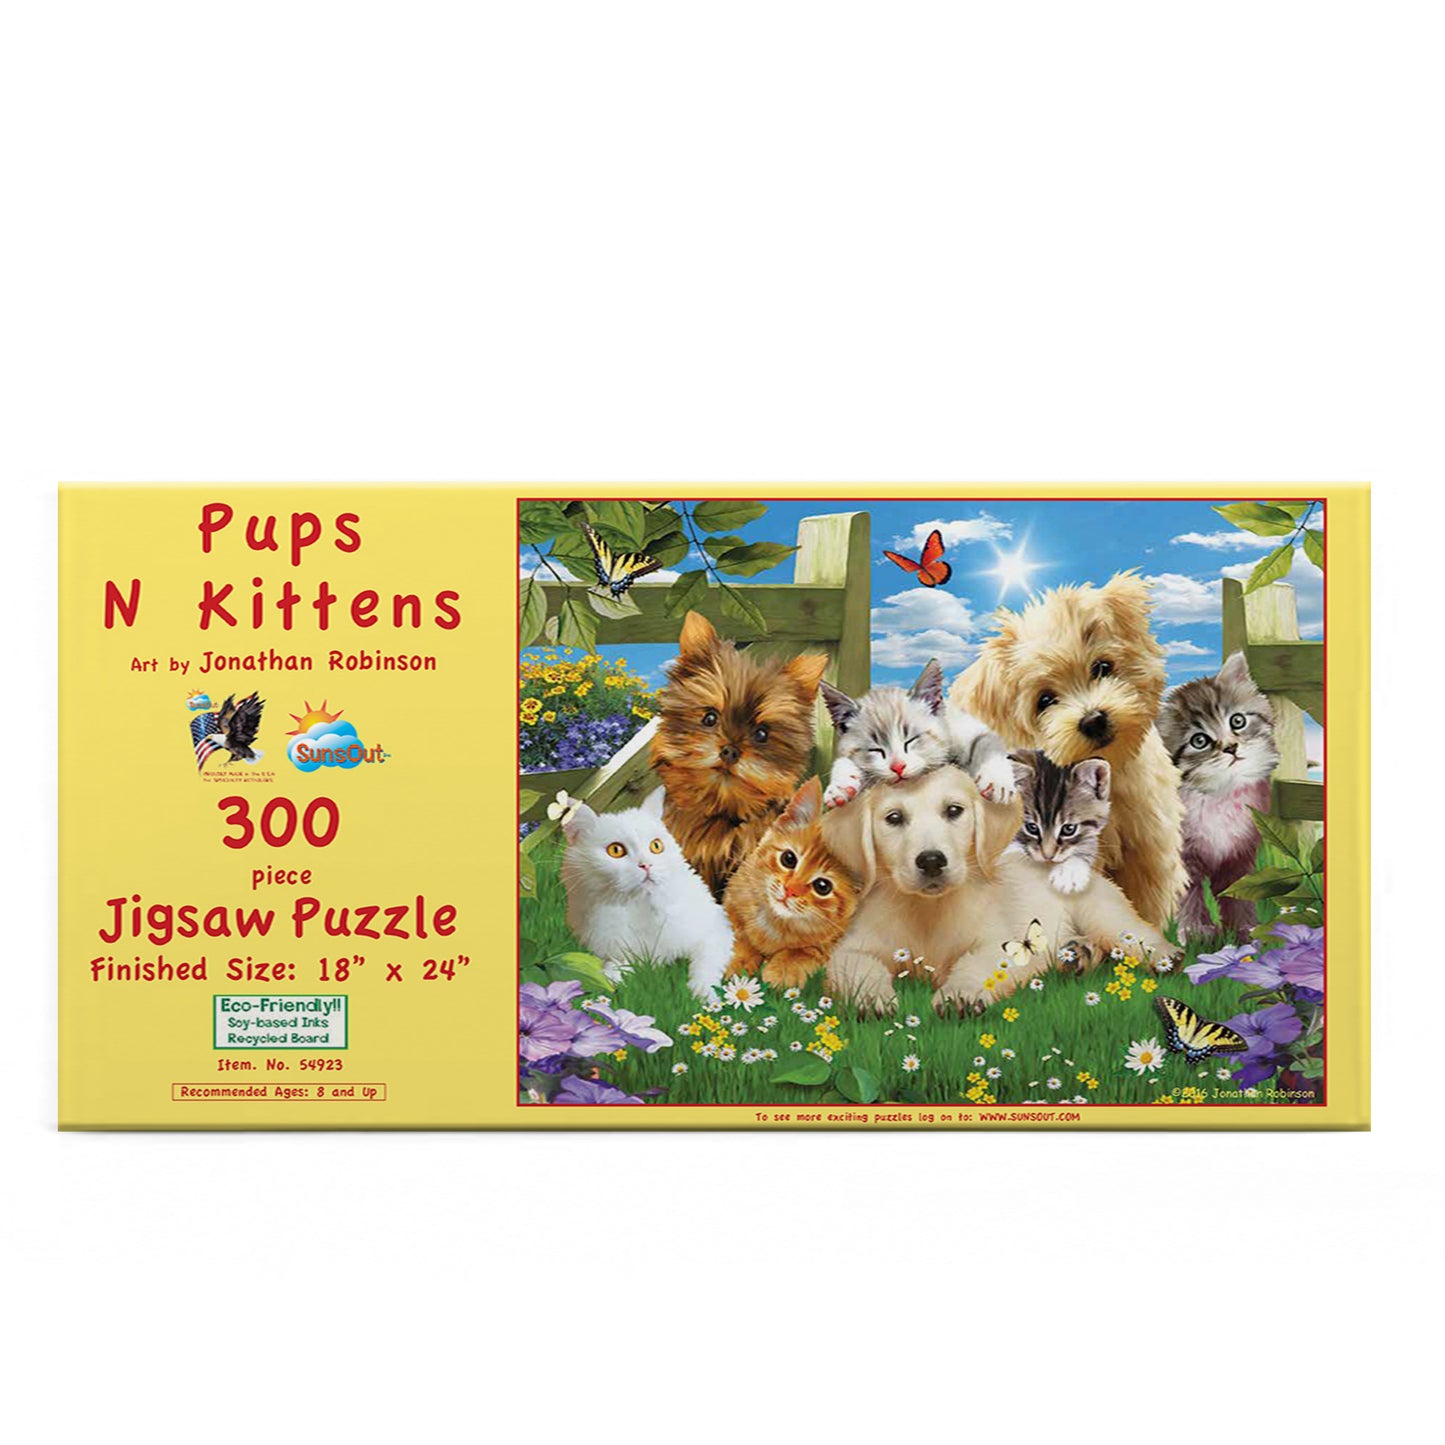 Pups n kittens - 300 Piece Jigsaw Puzzle